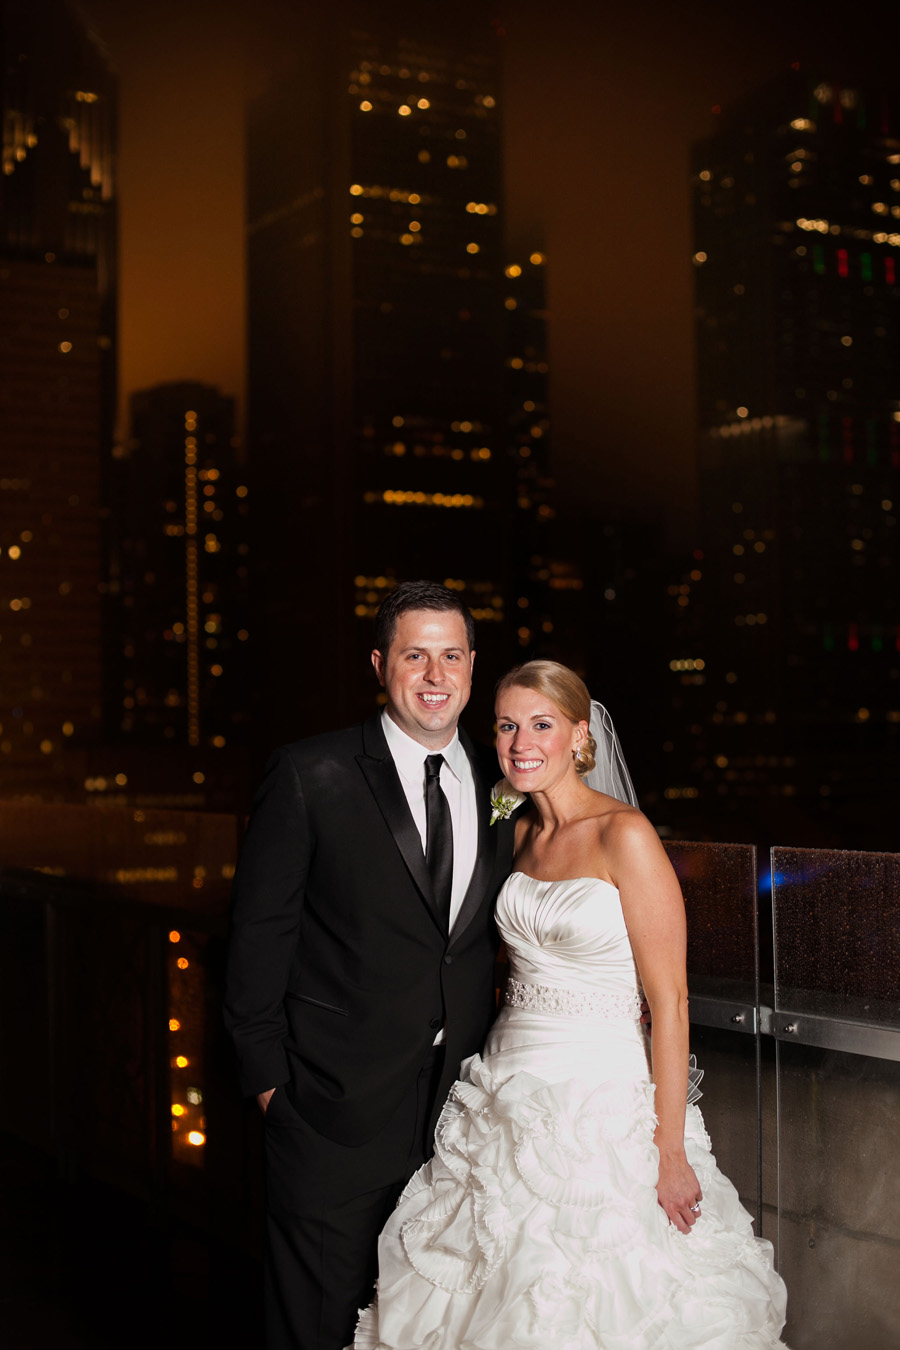 Chicago Skyline Night Wedding Portrait